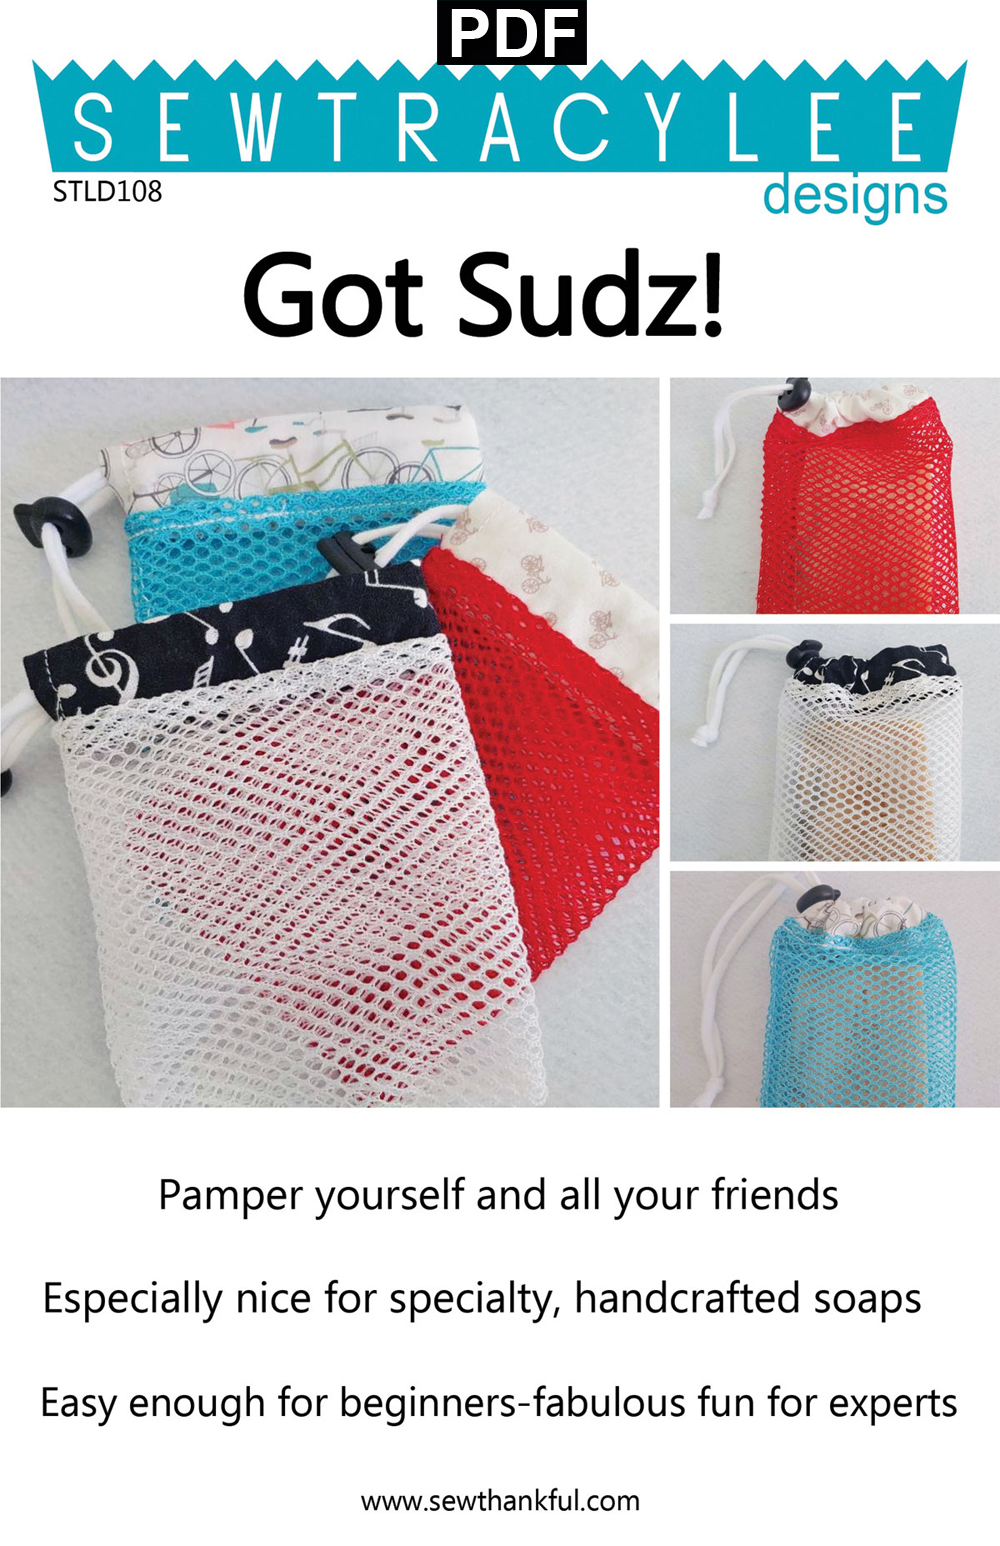 Got-Sudz-sewing-pattern-Sew-TracyLee-Designs-2-Front